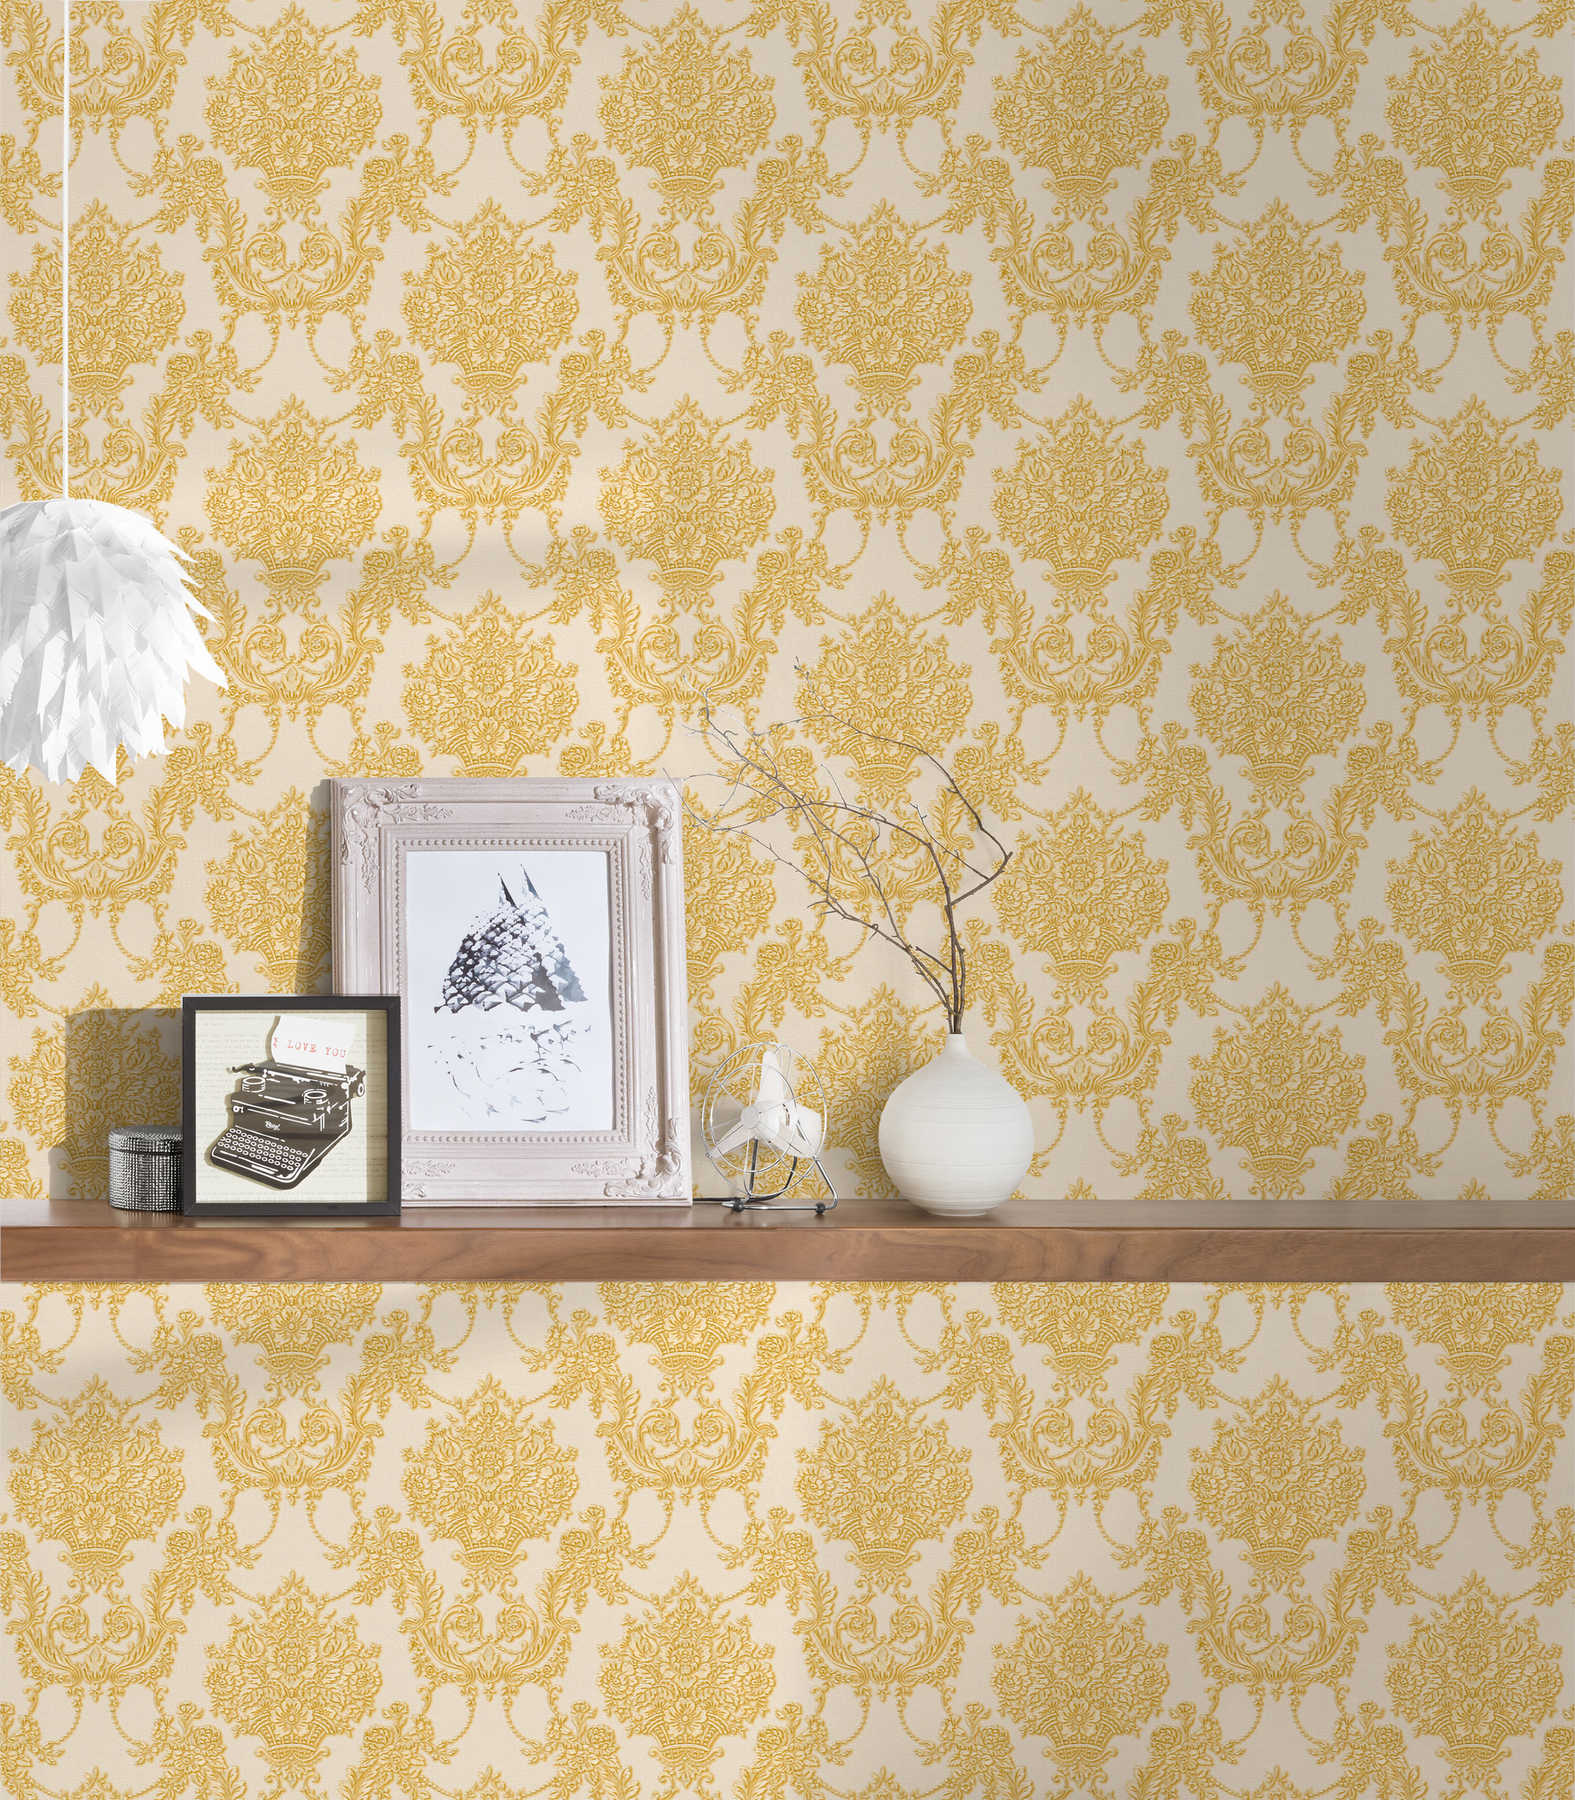             Golden baroque wallpaper with floral pattern - cream, metallic
        